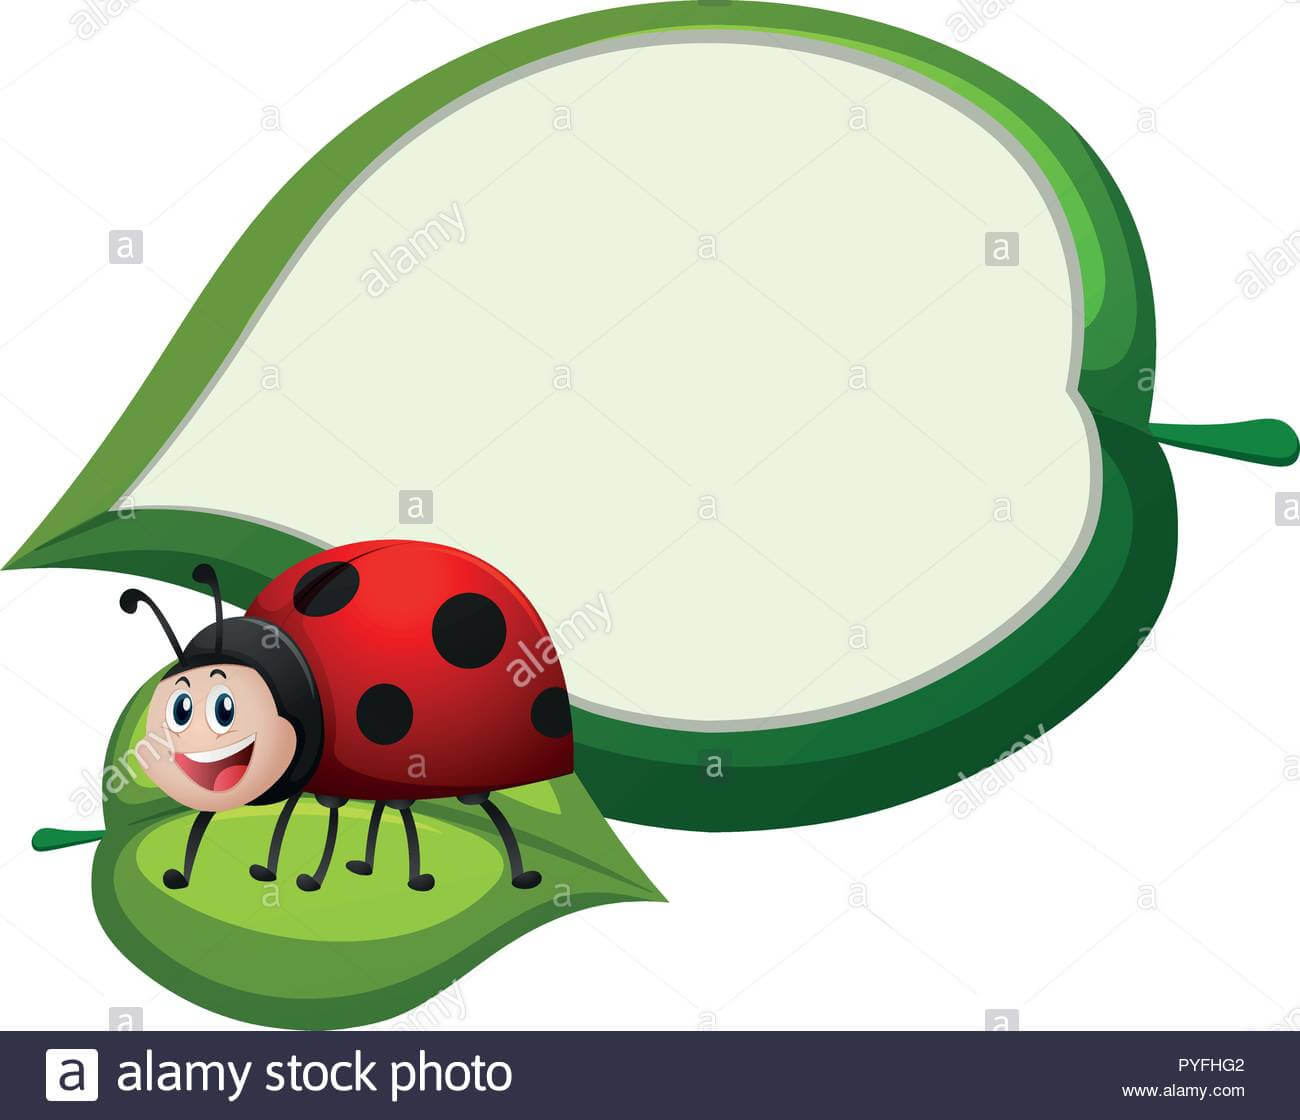 Border Template With Ladybug On Leaf Illustration Stock With Blank Ladybug Template